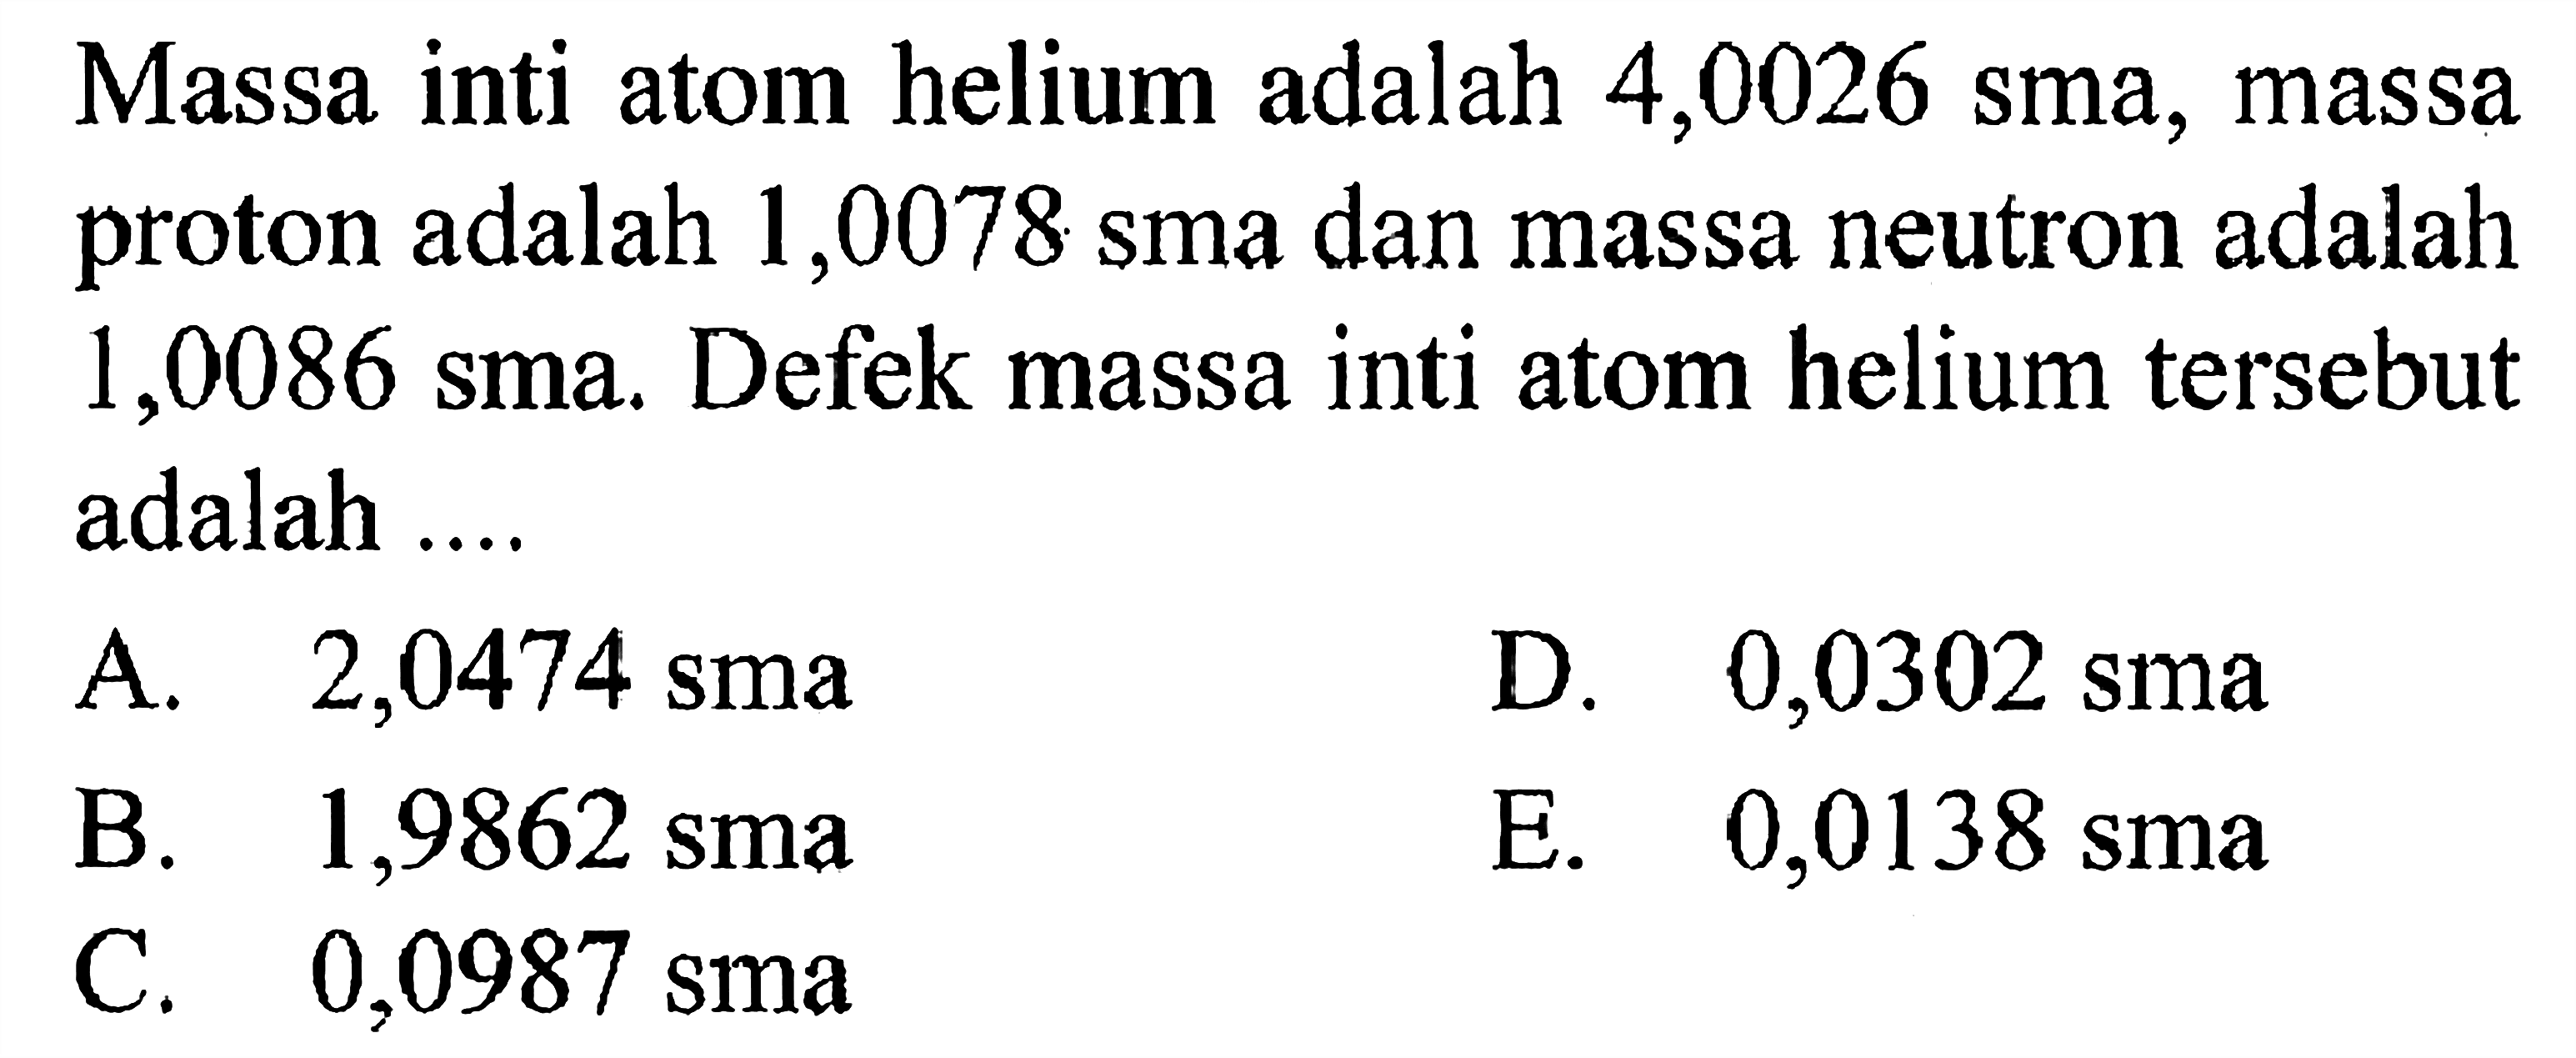 Massa inti atom helium adalah 4,0026 sma, massa proton adalah 1,0078 sma dan massa neutron adalah  1,0086 sma . Defek massa inti atom helium tersebut adalah ....